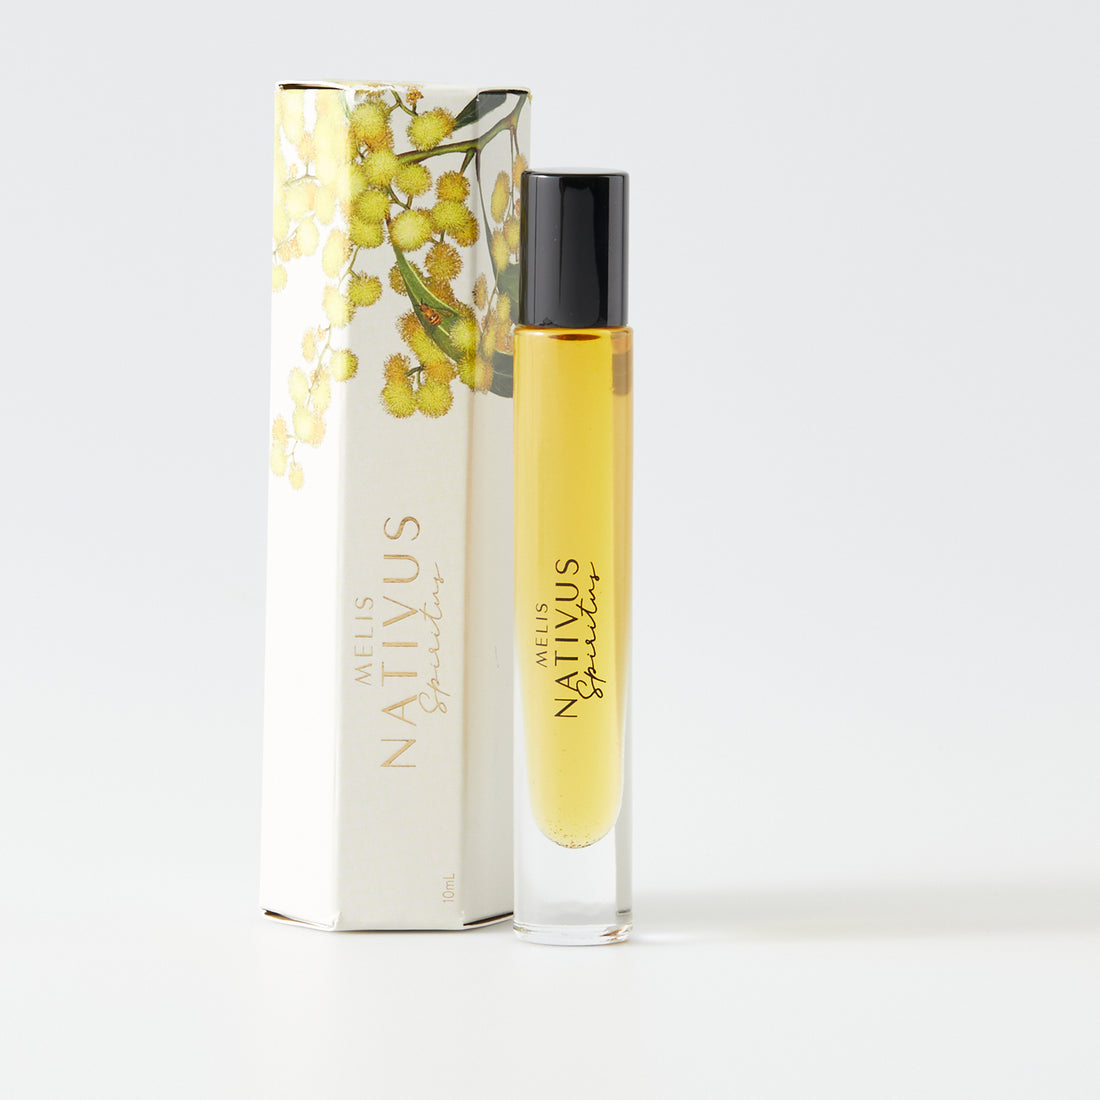 Melis Navitus Spiritus natural perfume